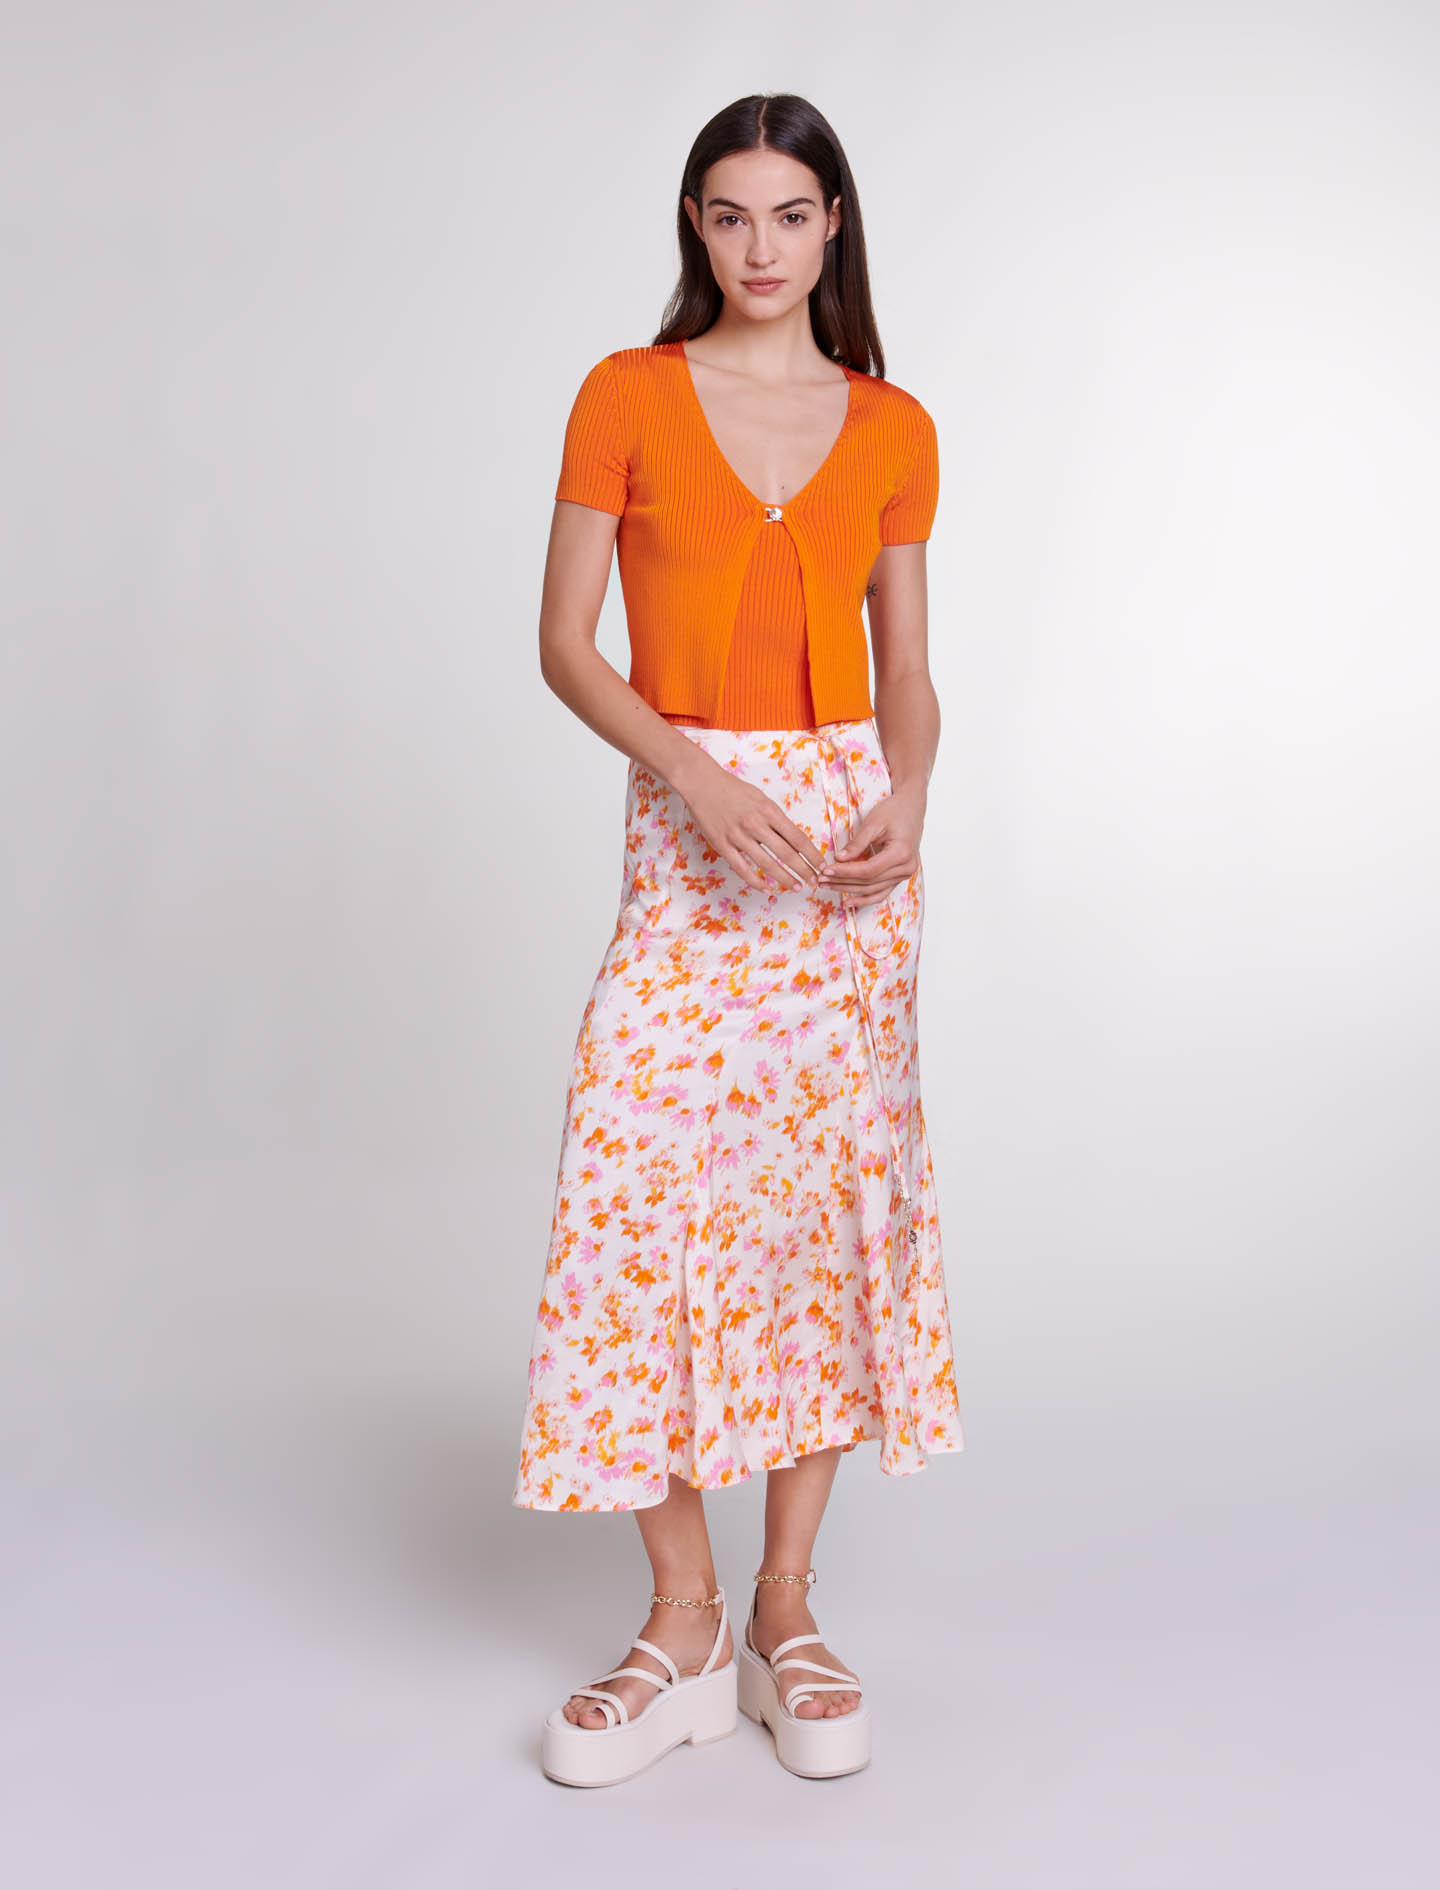 Maje Woman's viscose, Rib knit twin set for Spring/Summer, in color Orange / Orange